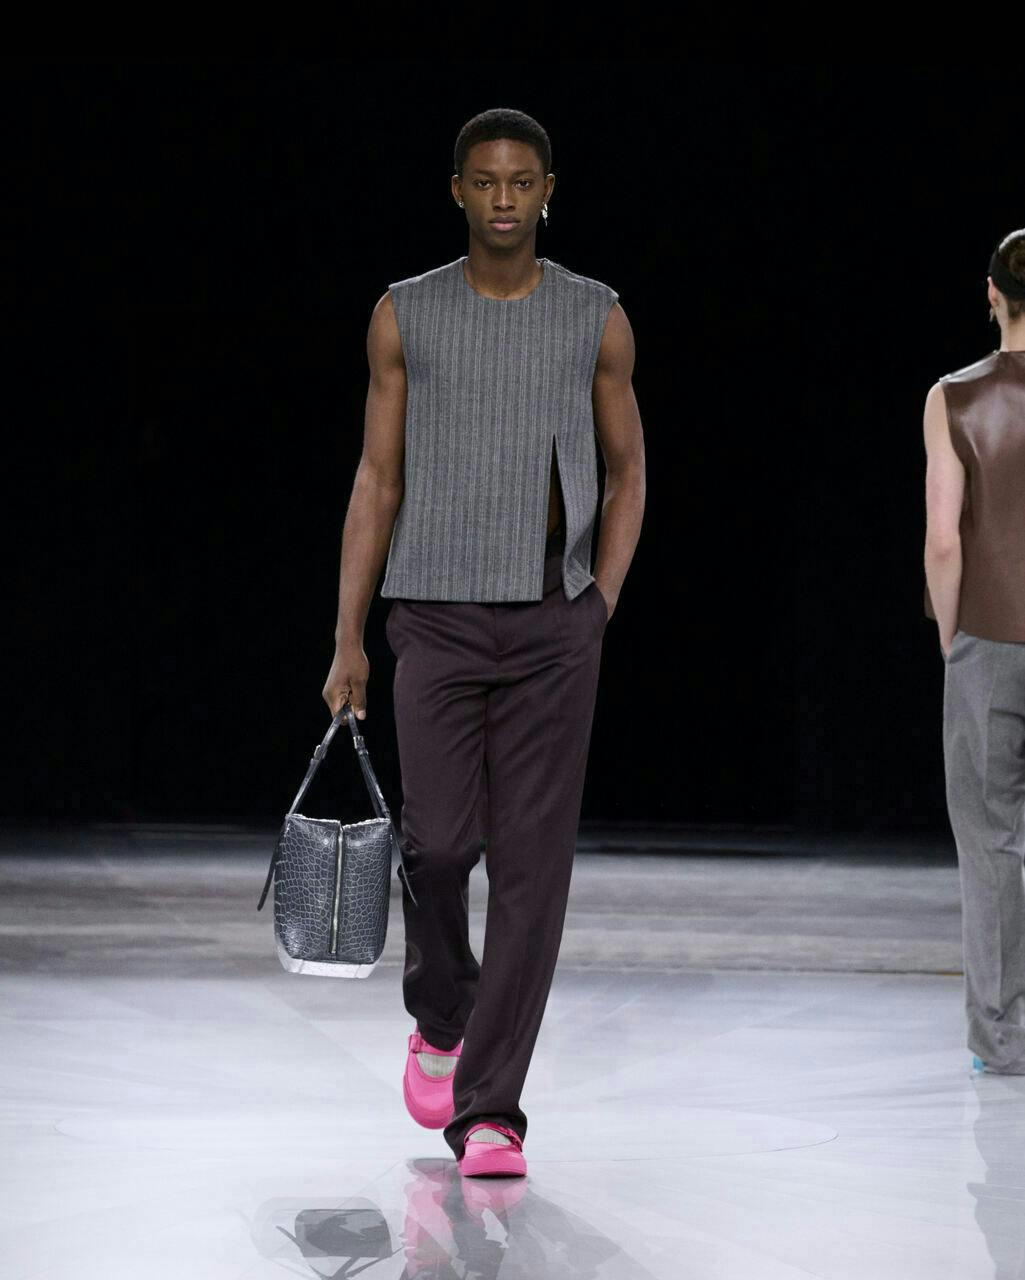 fashion adult male man person bag handbag clothing vest standing